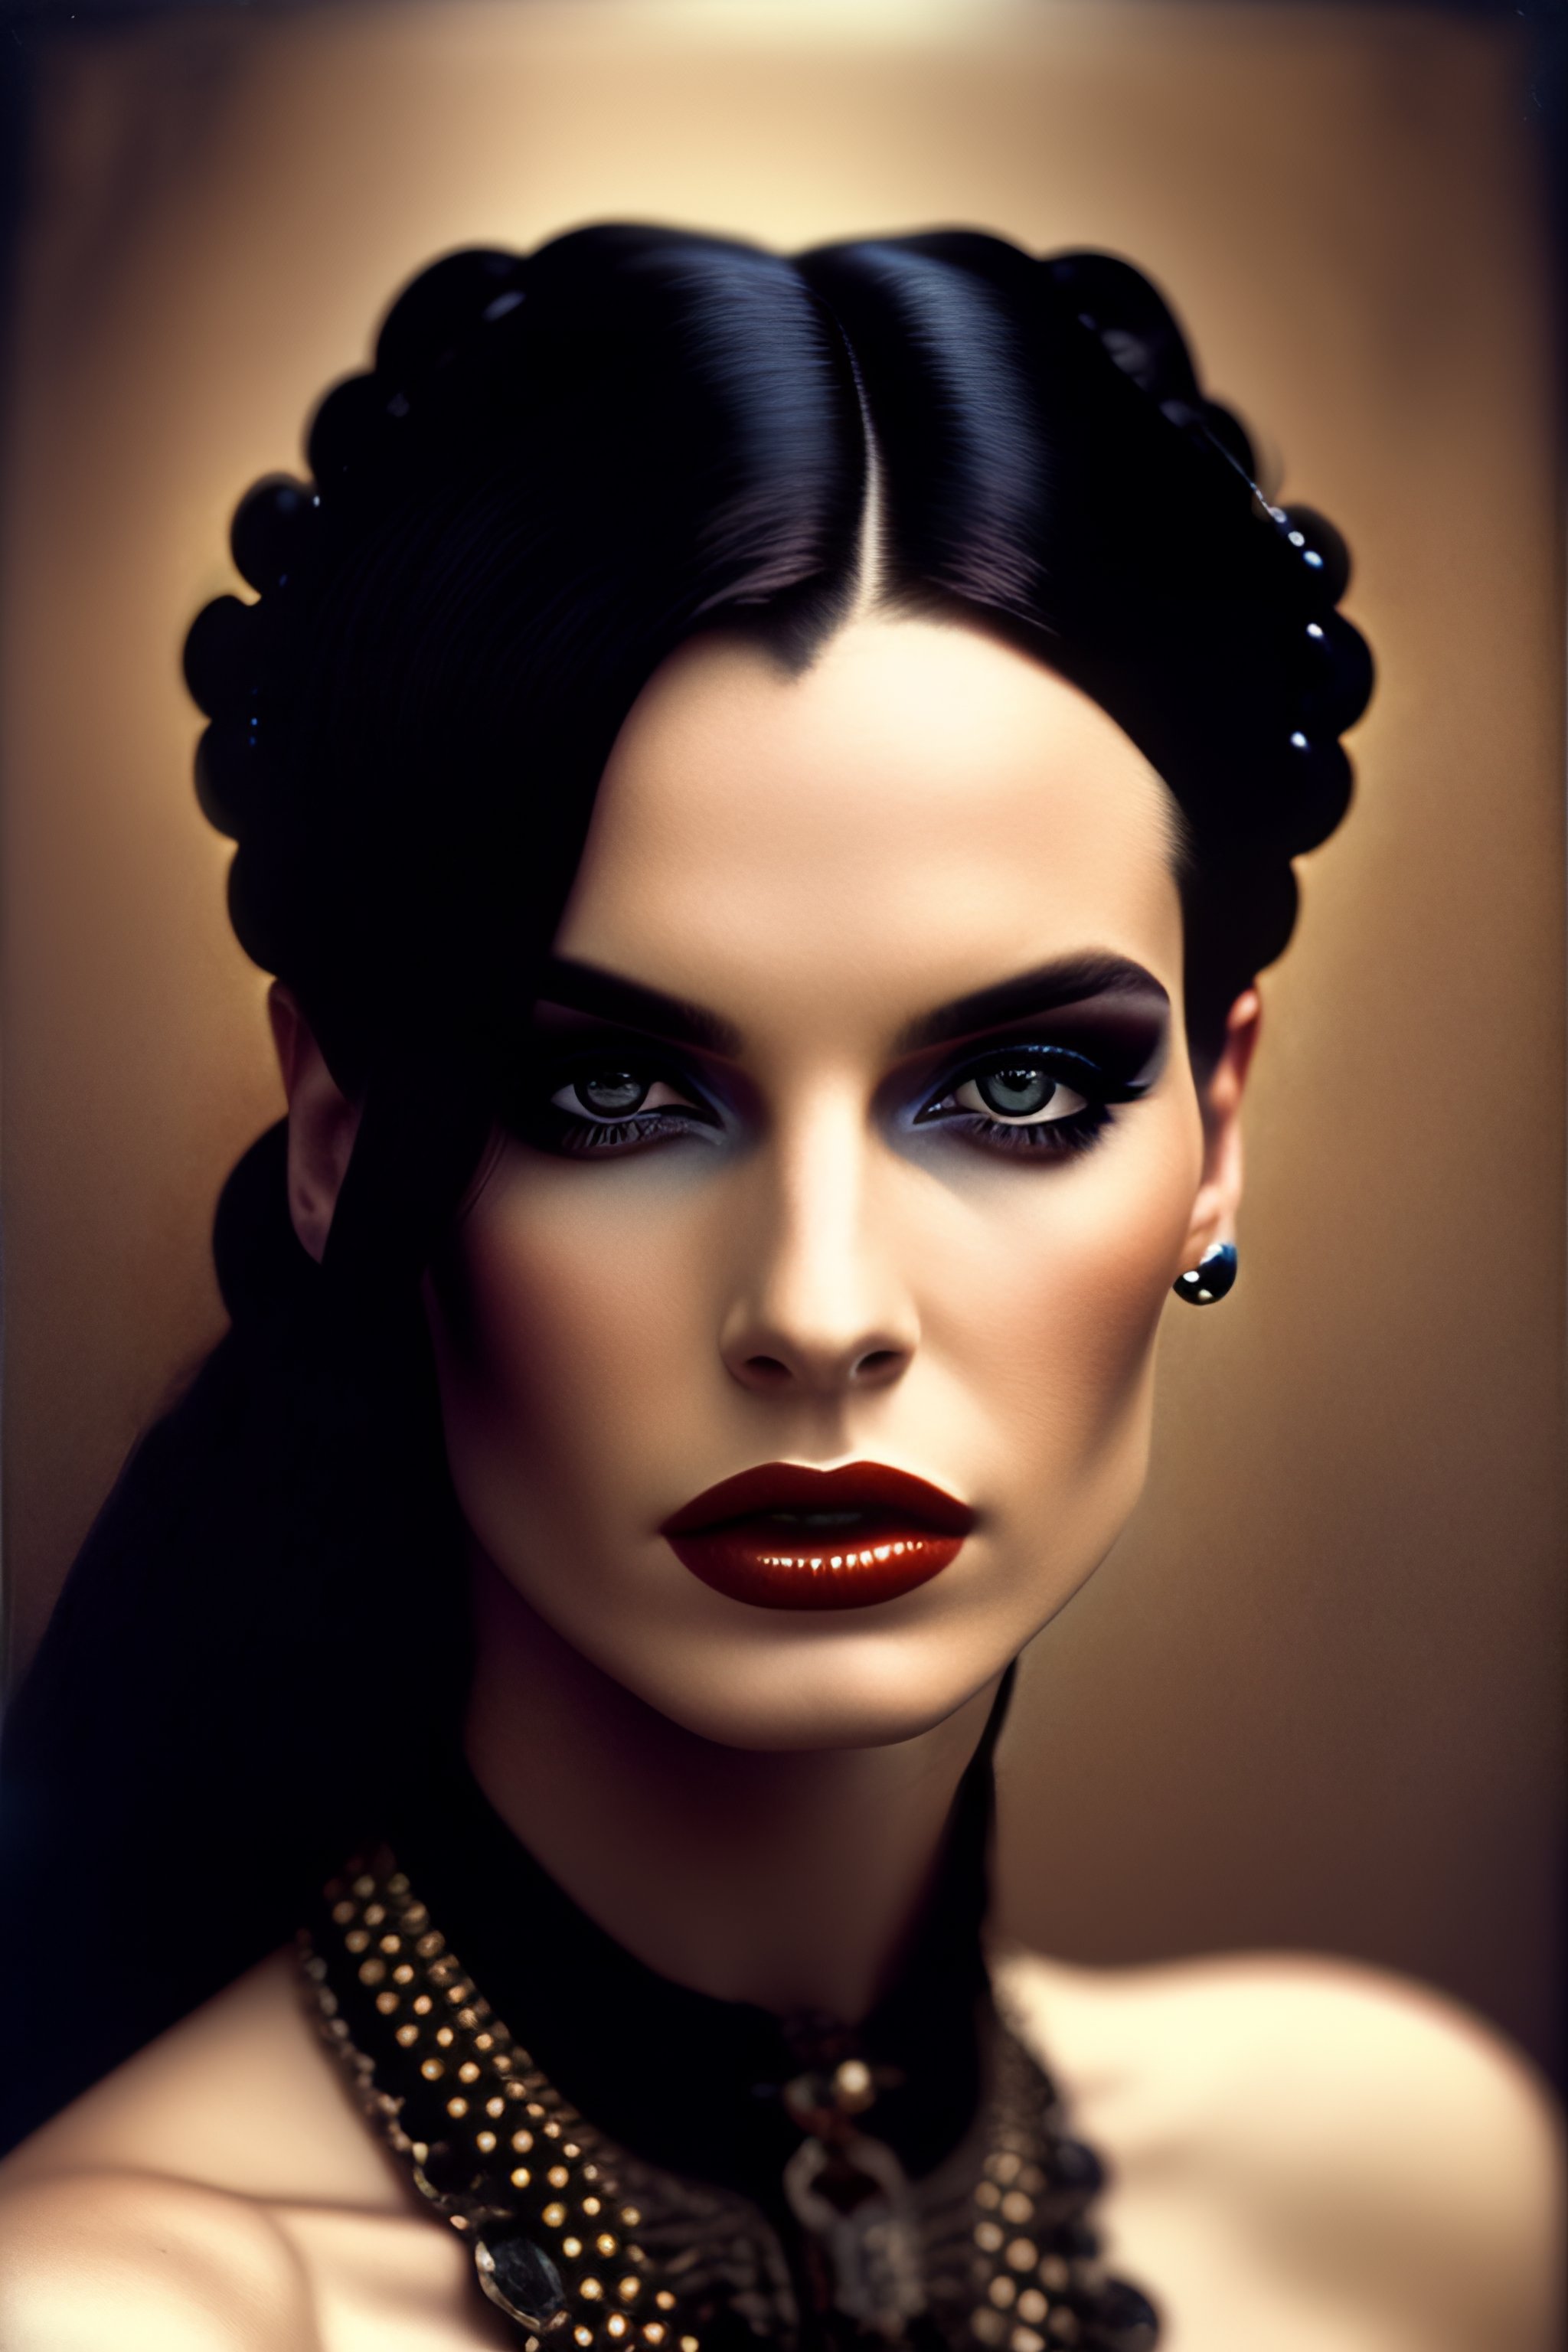 Lexica Analog Style Goth Gothic Goddess Close Up Portrait Photo By Annie Leibovitz Film